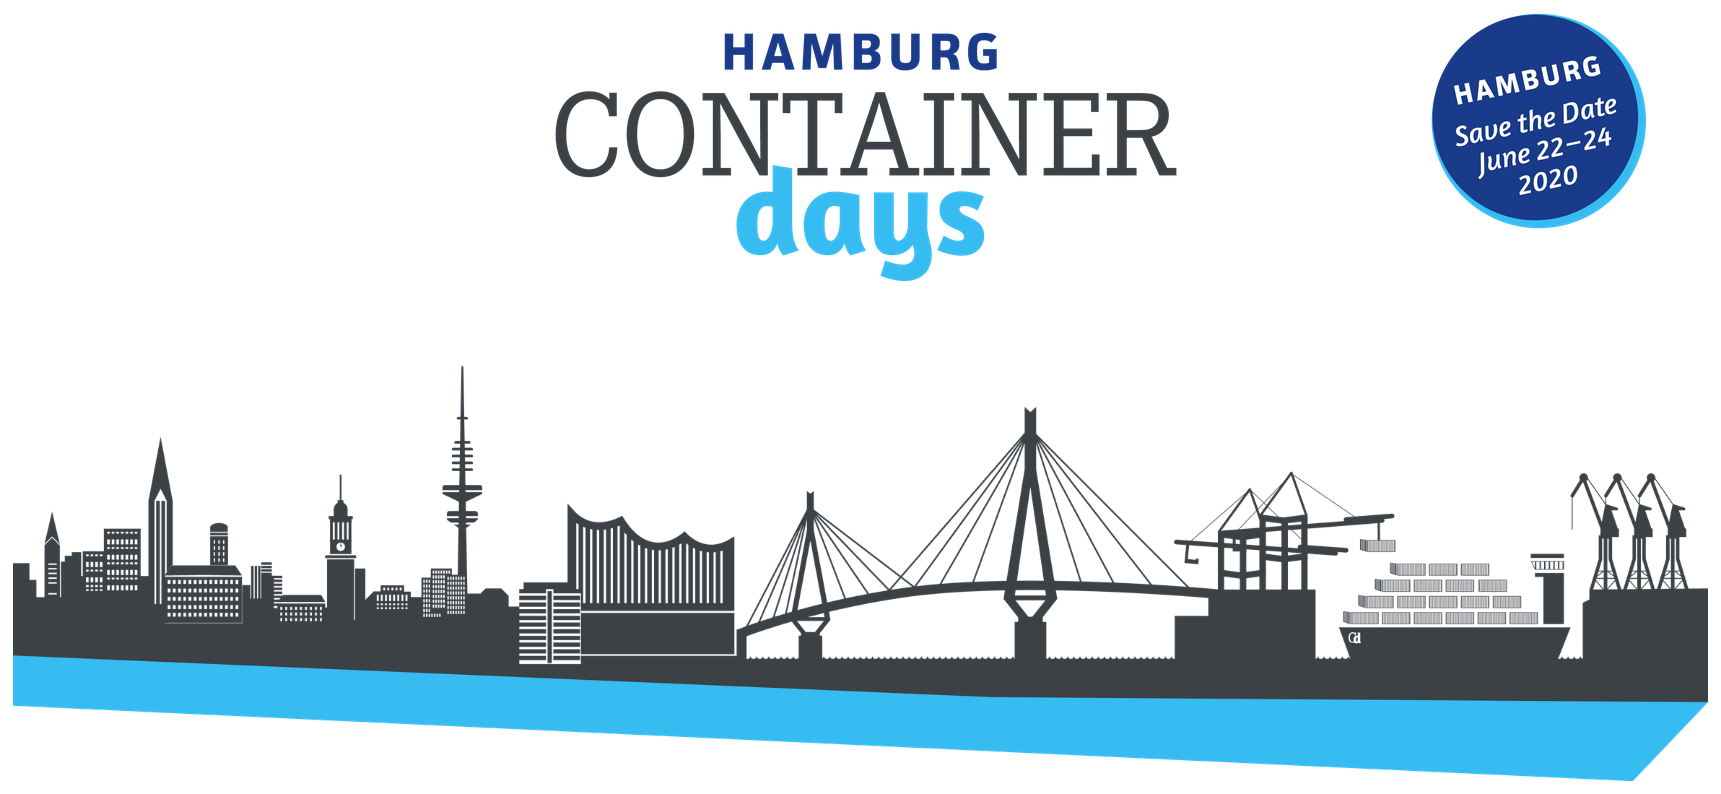 22. Jun to 24. Jun - ContainerDays 2020 Banner/Logo